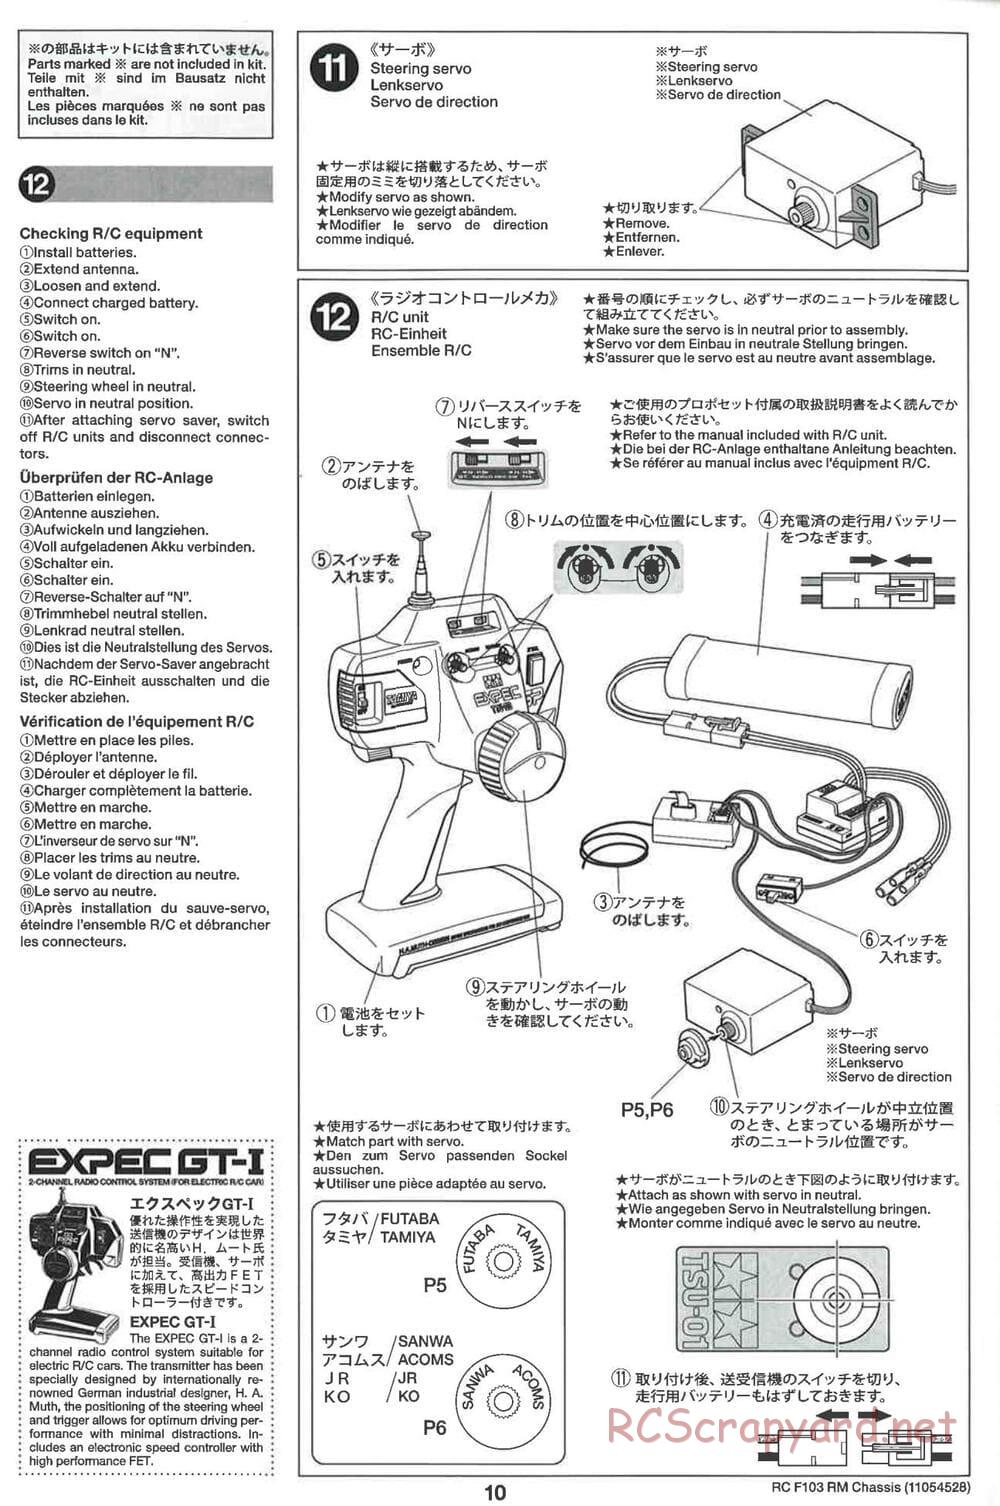 Tamiya - F103RM Chassis - Manual - Page 10